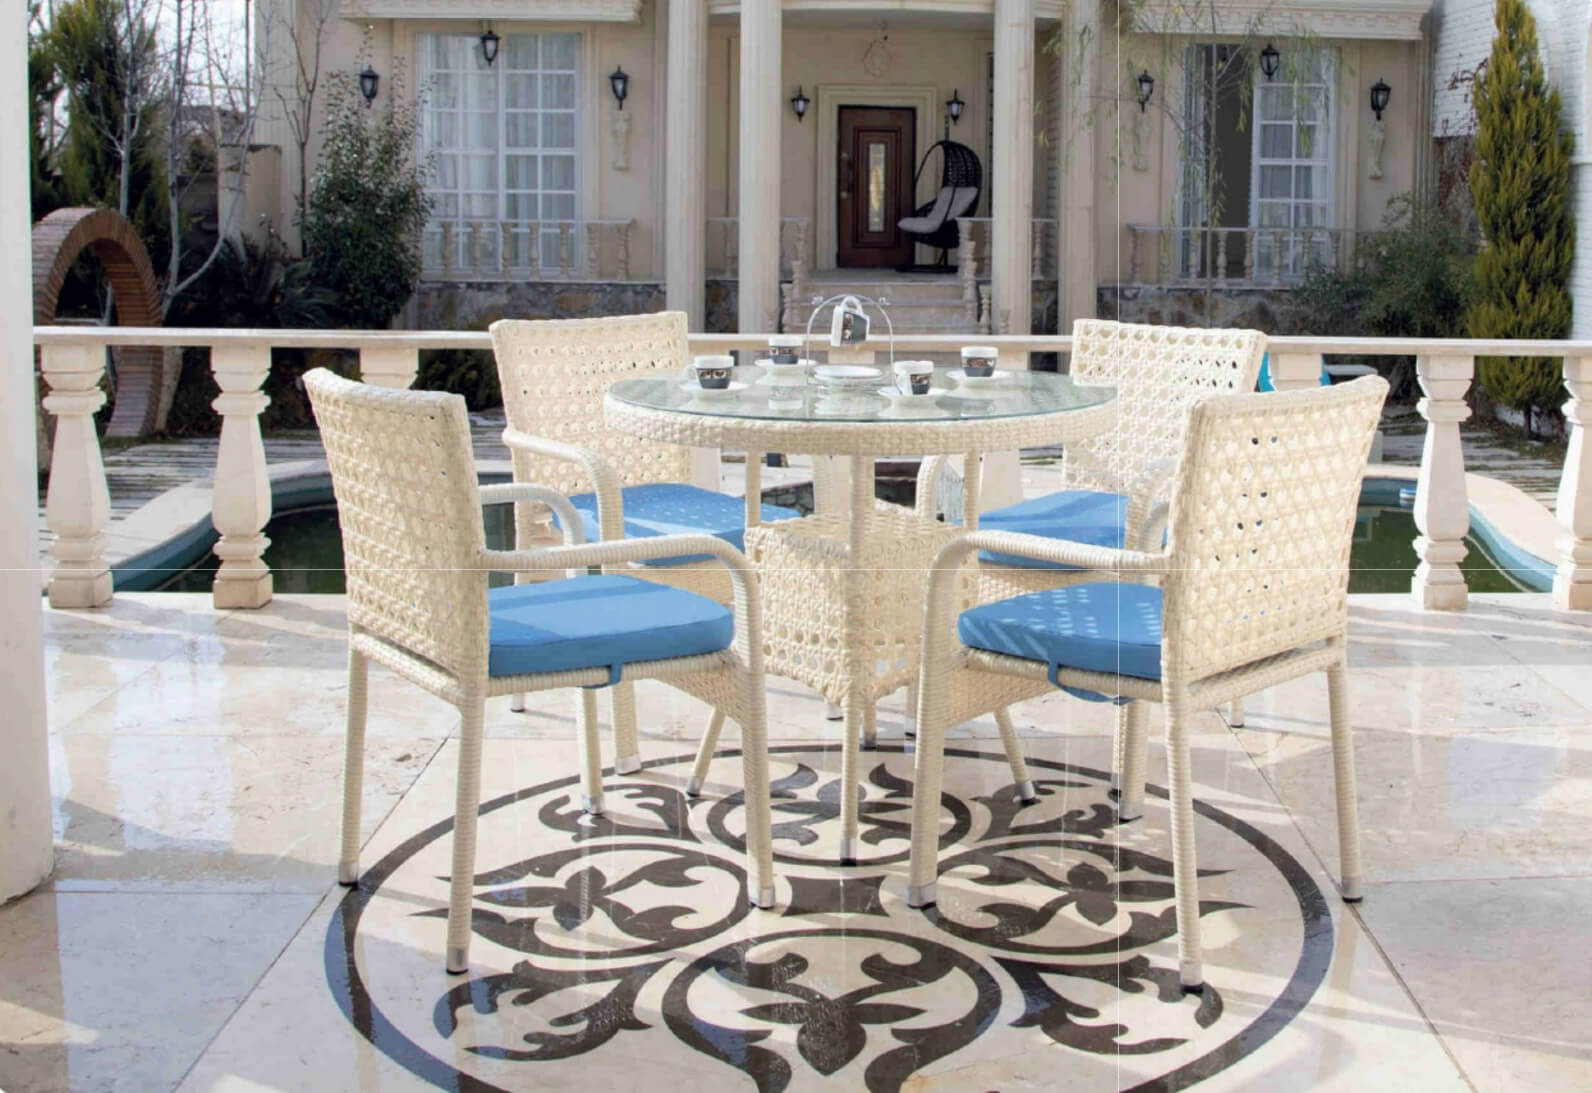 decorose patio dining furniture veronica model 00 - ست میز صندلی تراس چهار نفره مدل نیلان -  - patio-dining-furniture